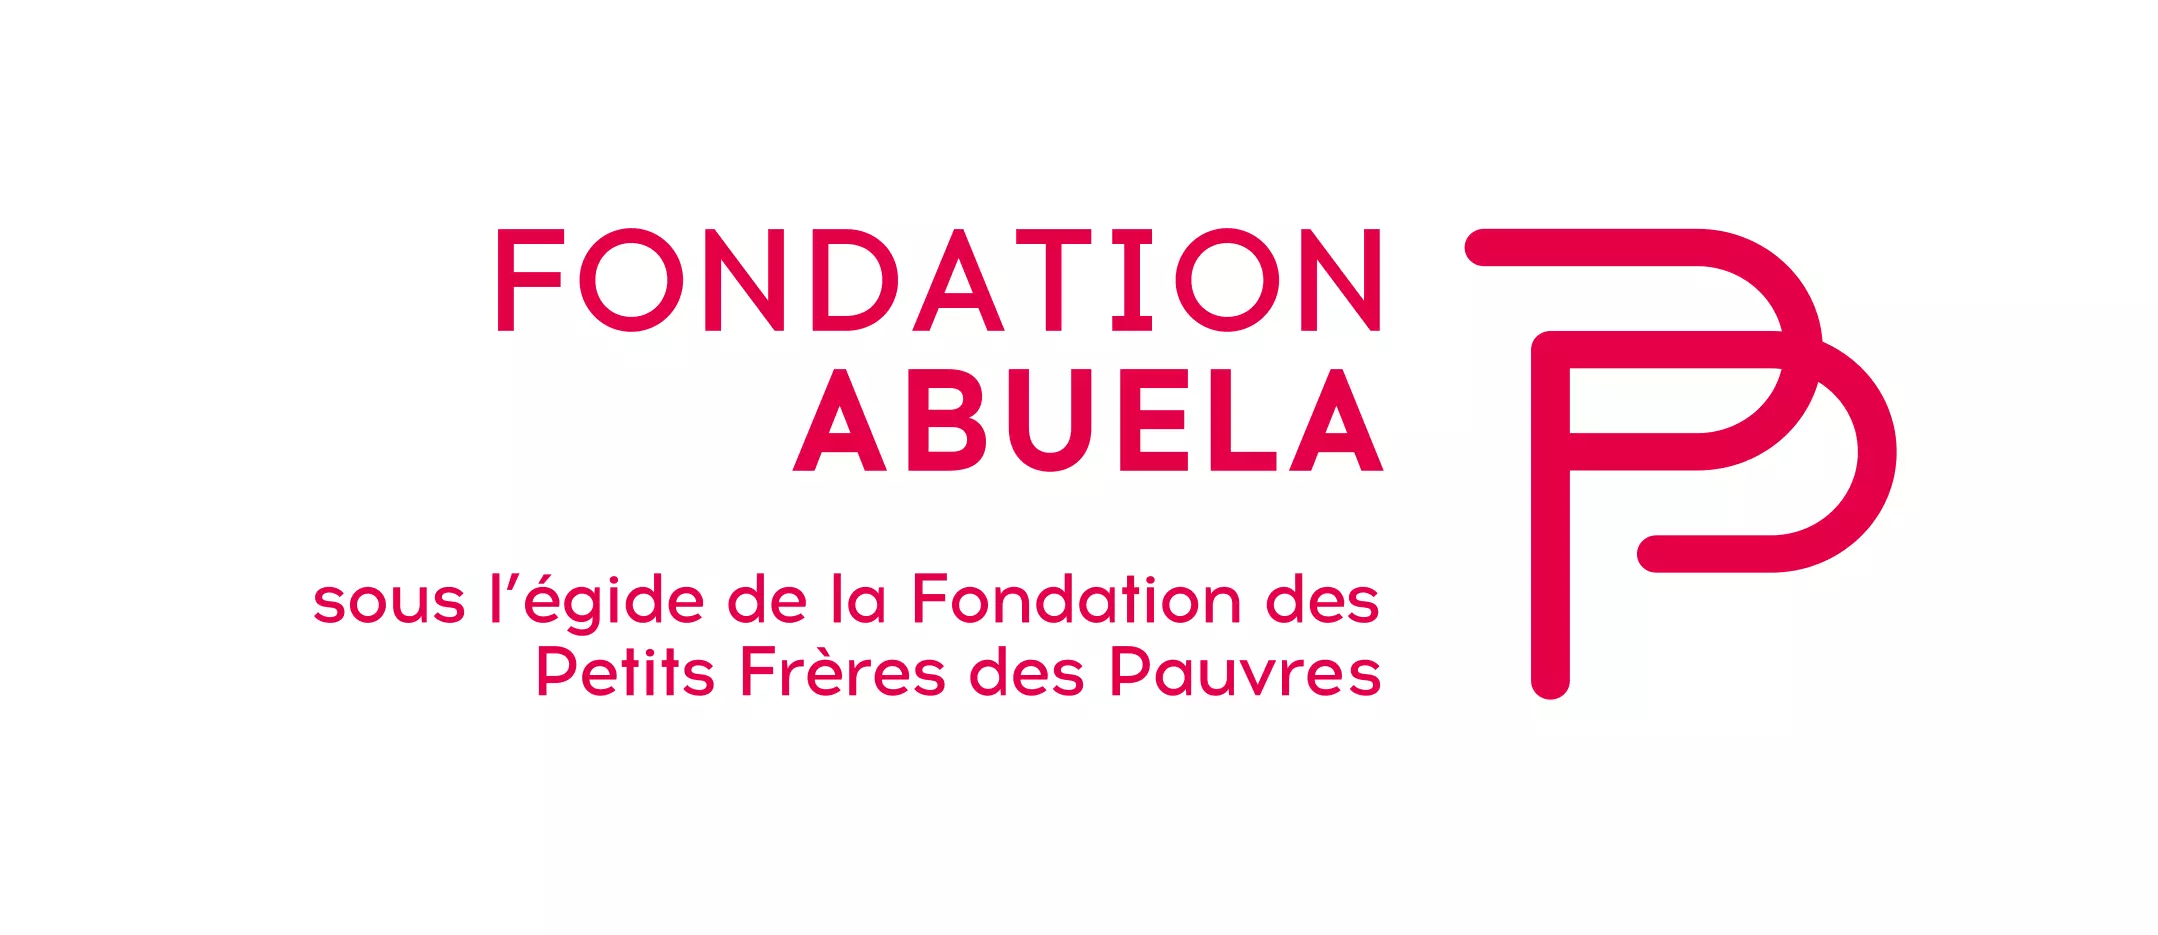 La Fondation Abuela